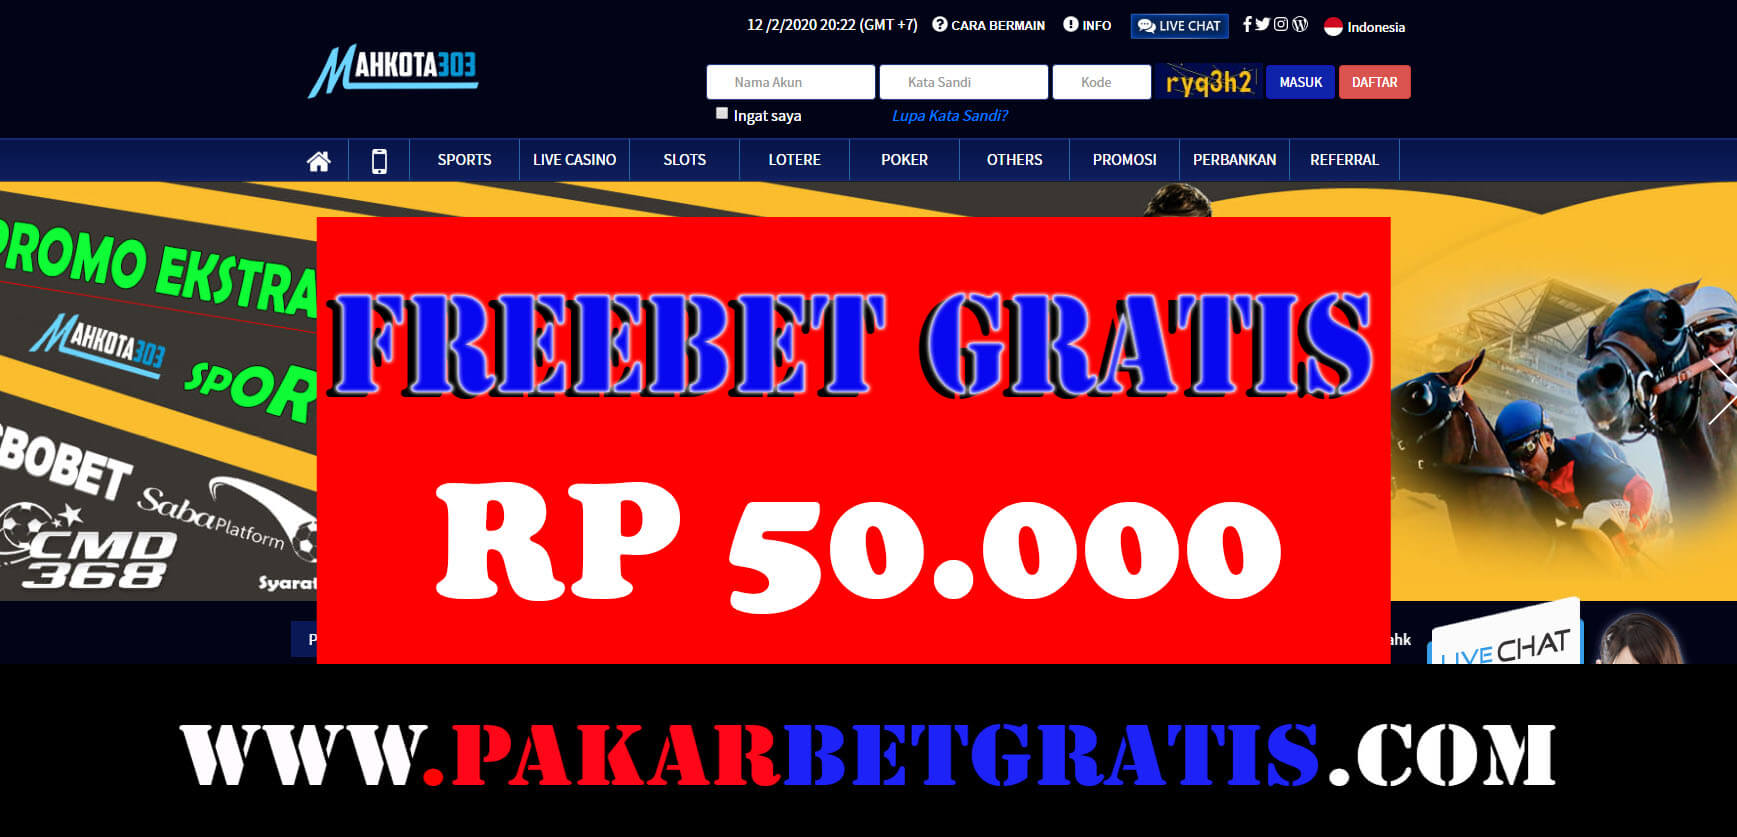 Freebet Gratis mahkota new Rp 50.000